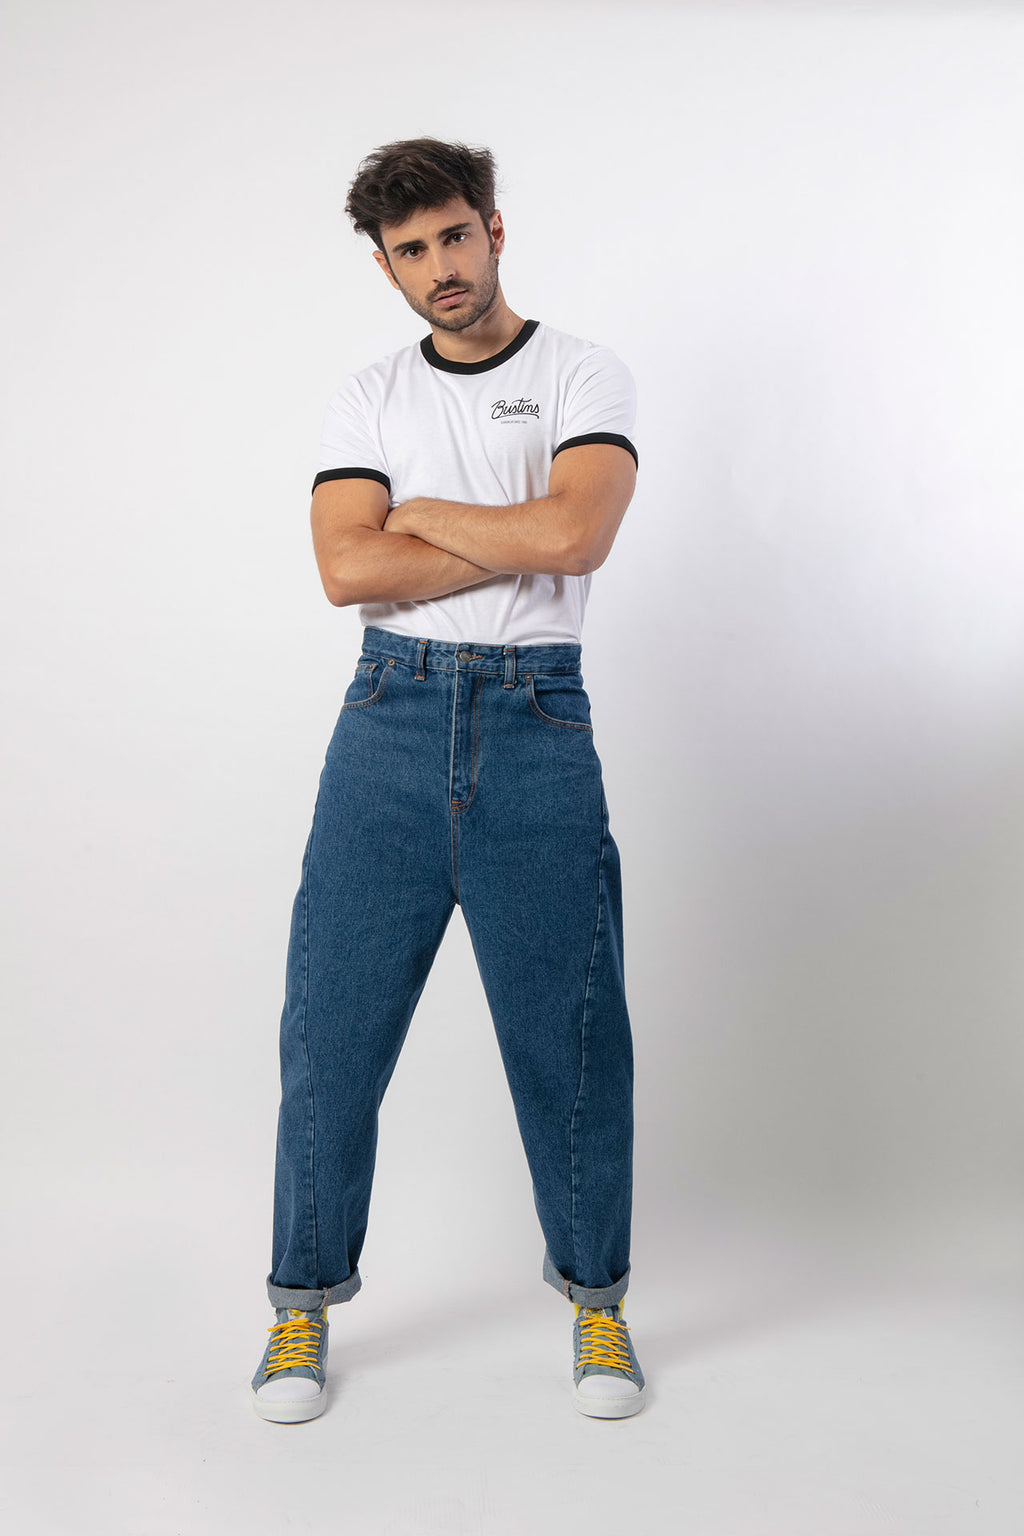 Pantalones Vaqueros Anchos de Hombre – Bustins Jeans